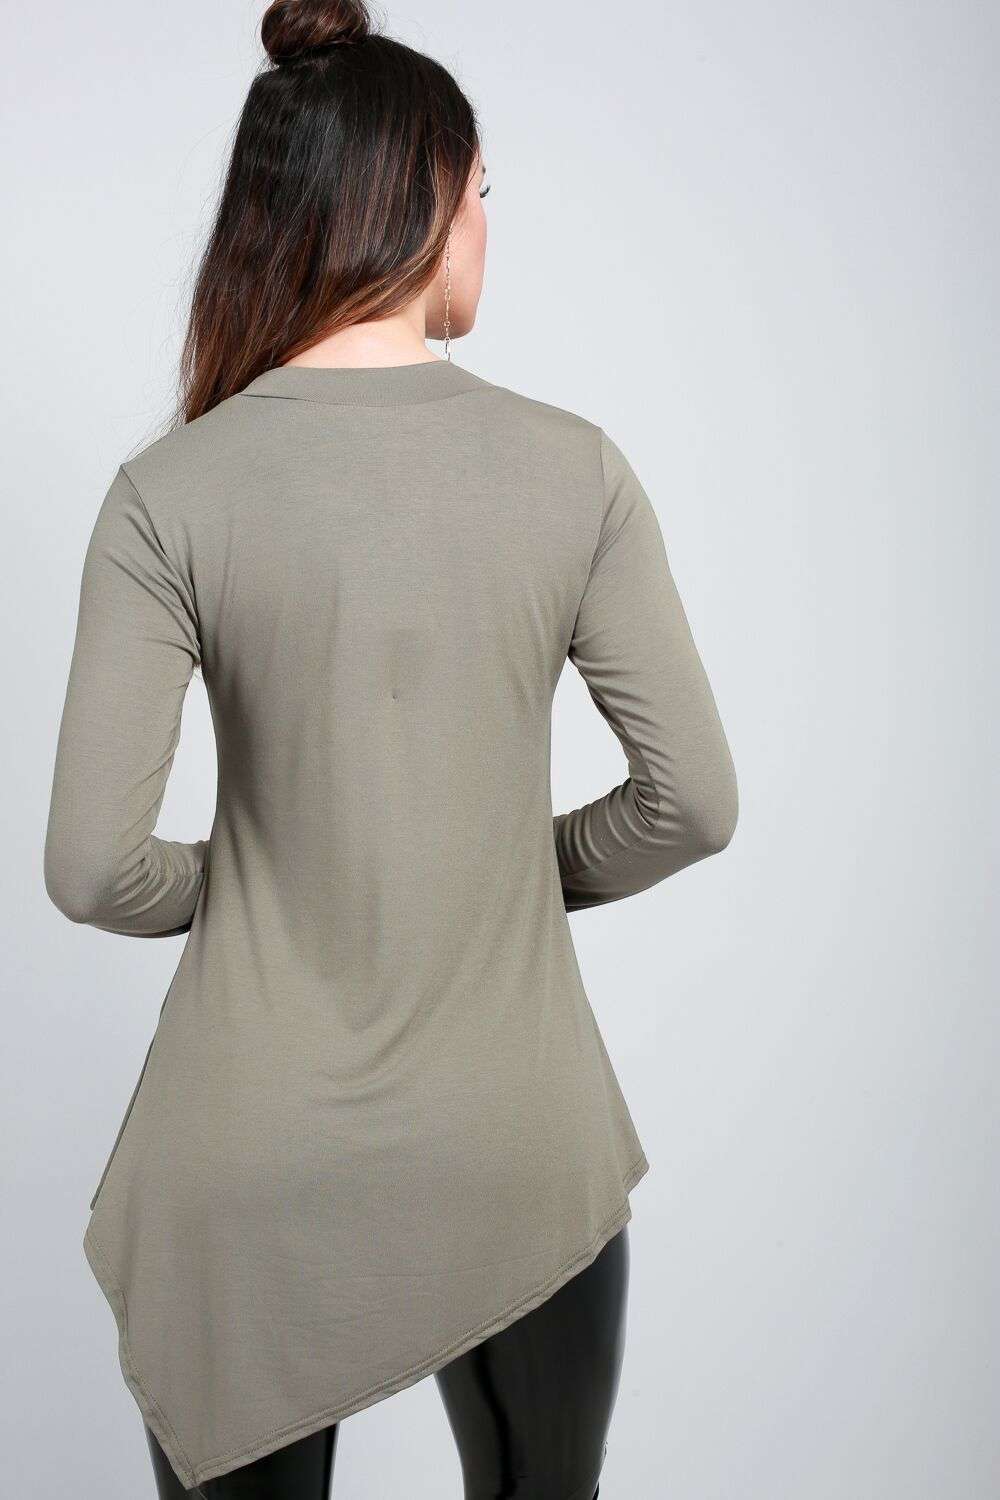 Jess Long Sleeve Slanted Hem Basic Jersey Top - bejealous-com